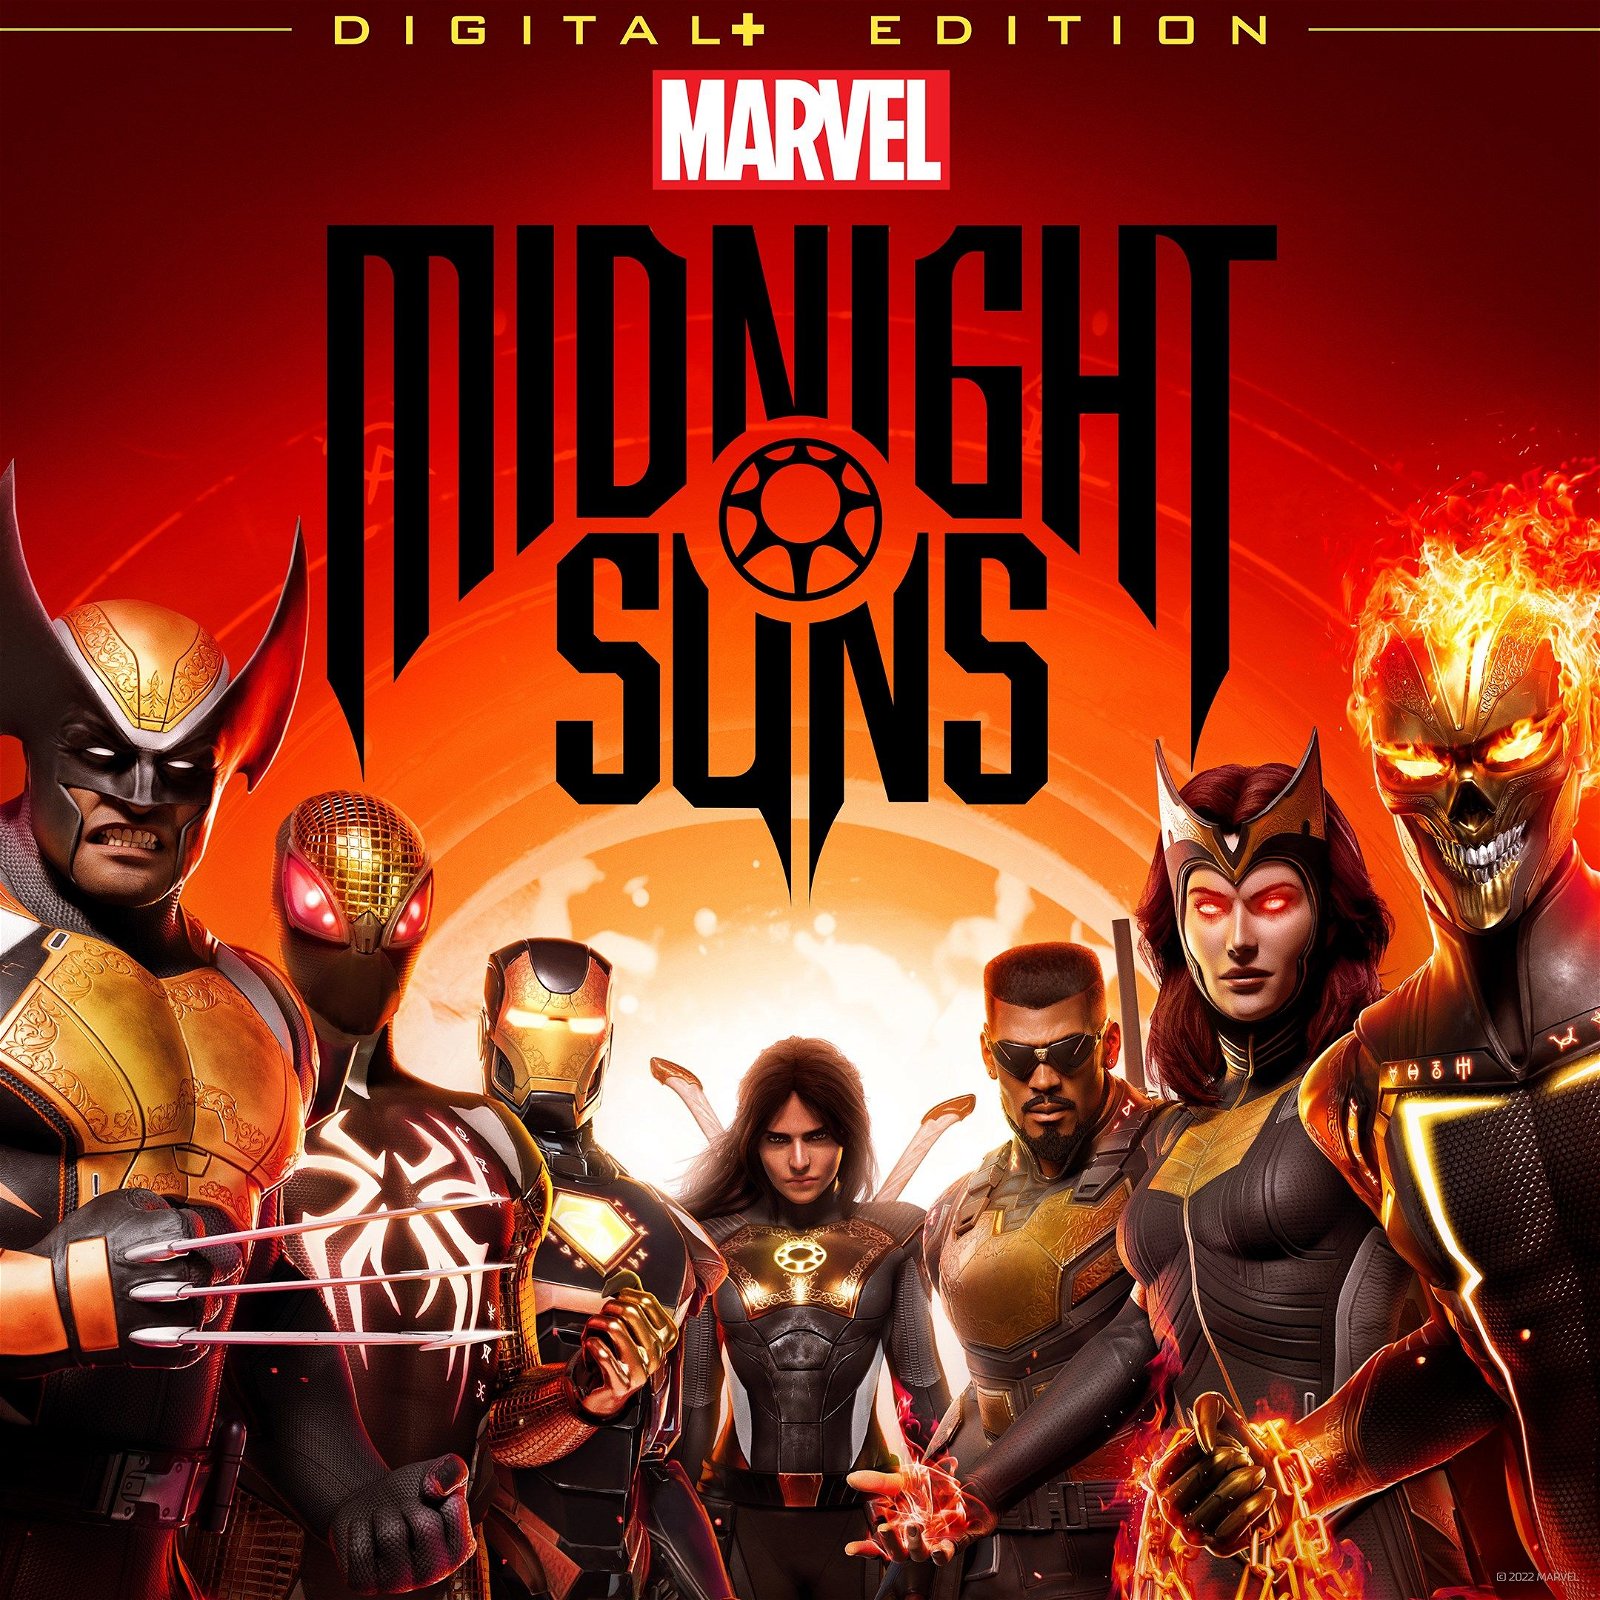 Image of Marvel's Midnight Suns Digital+ Edition for